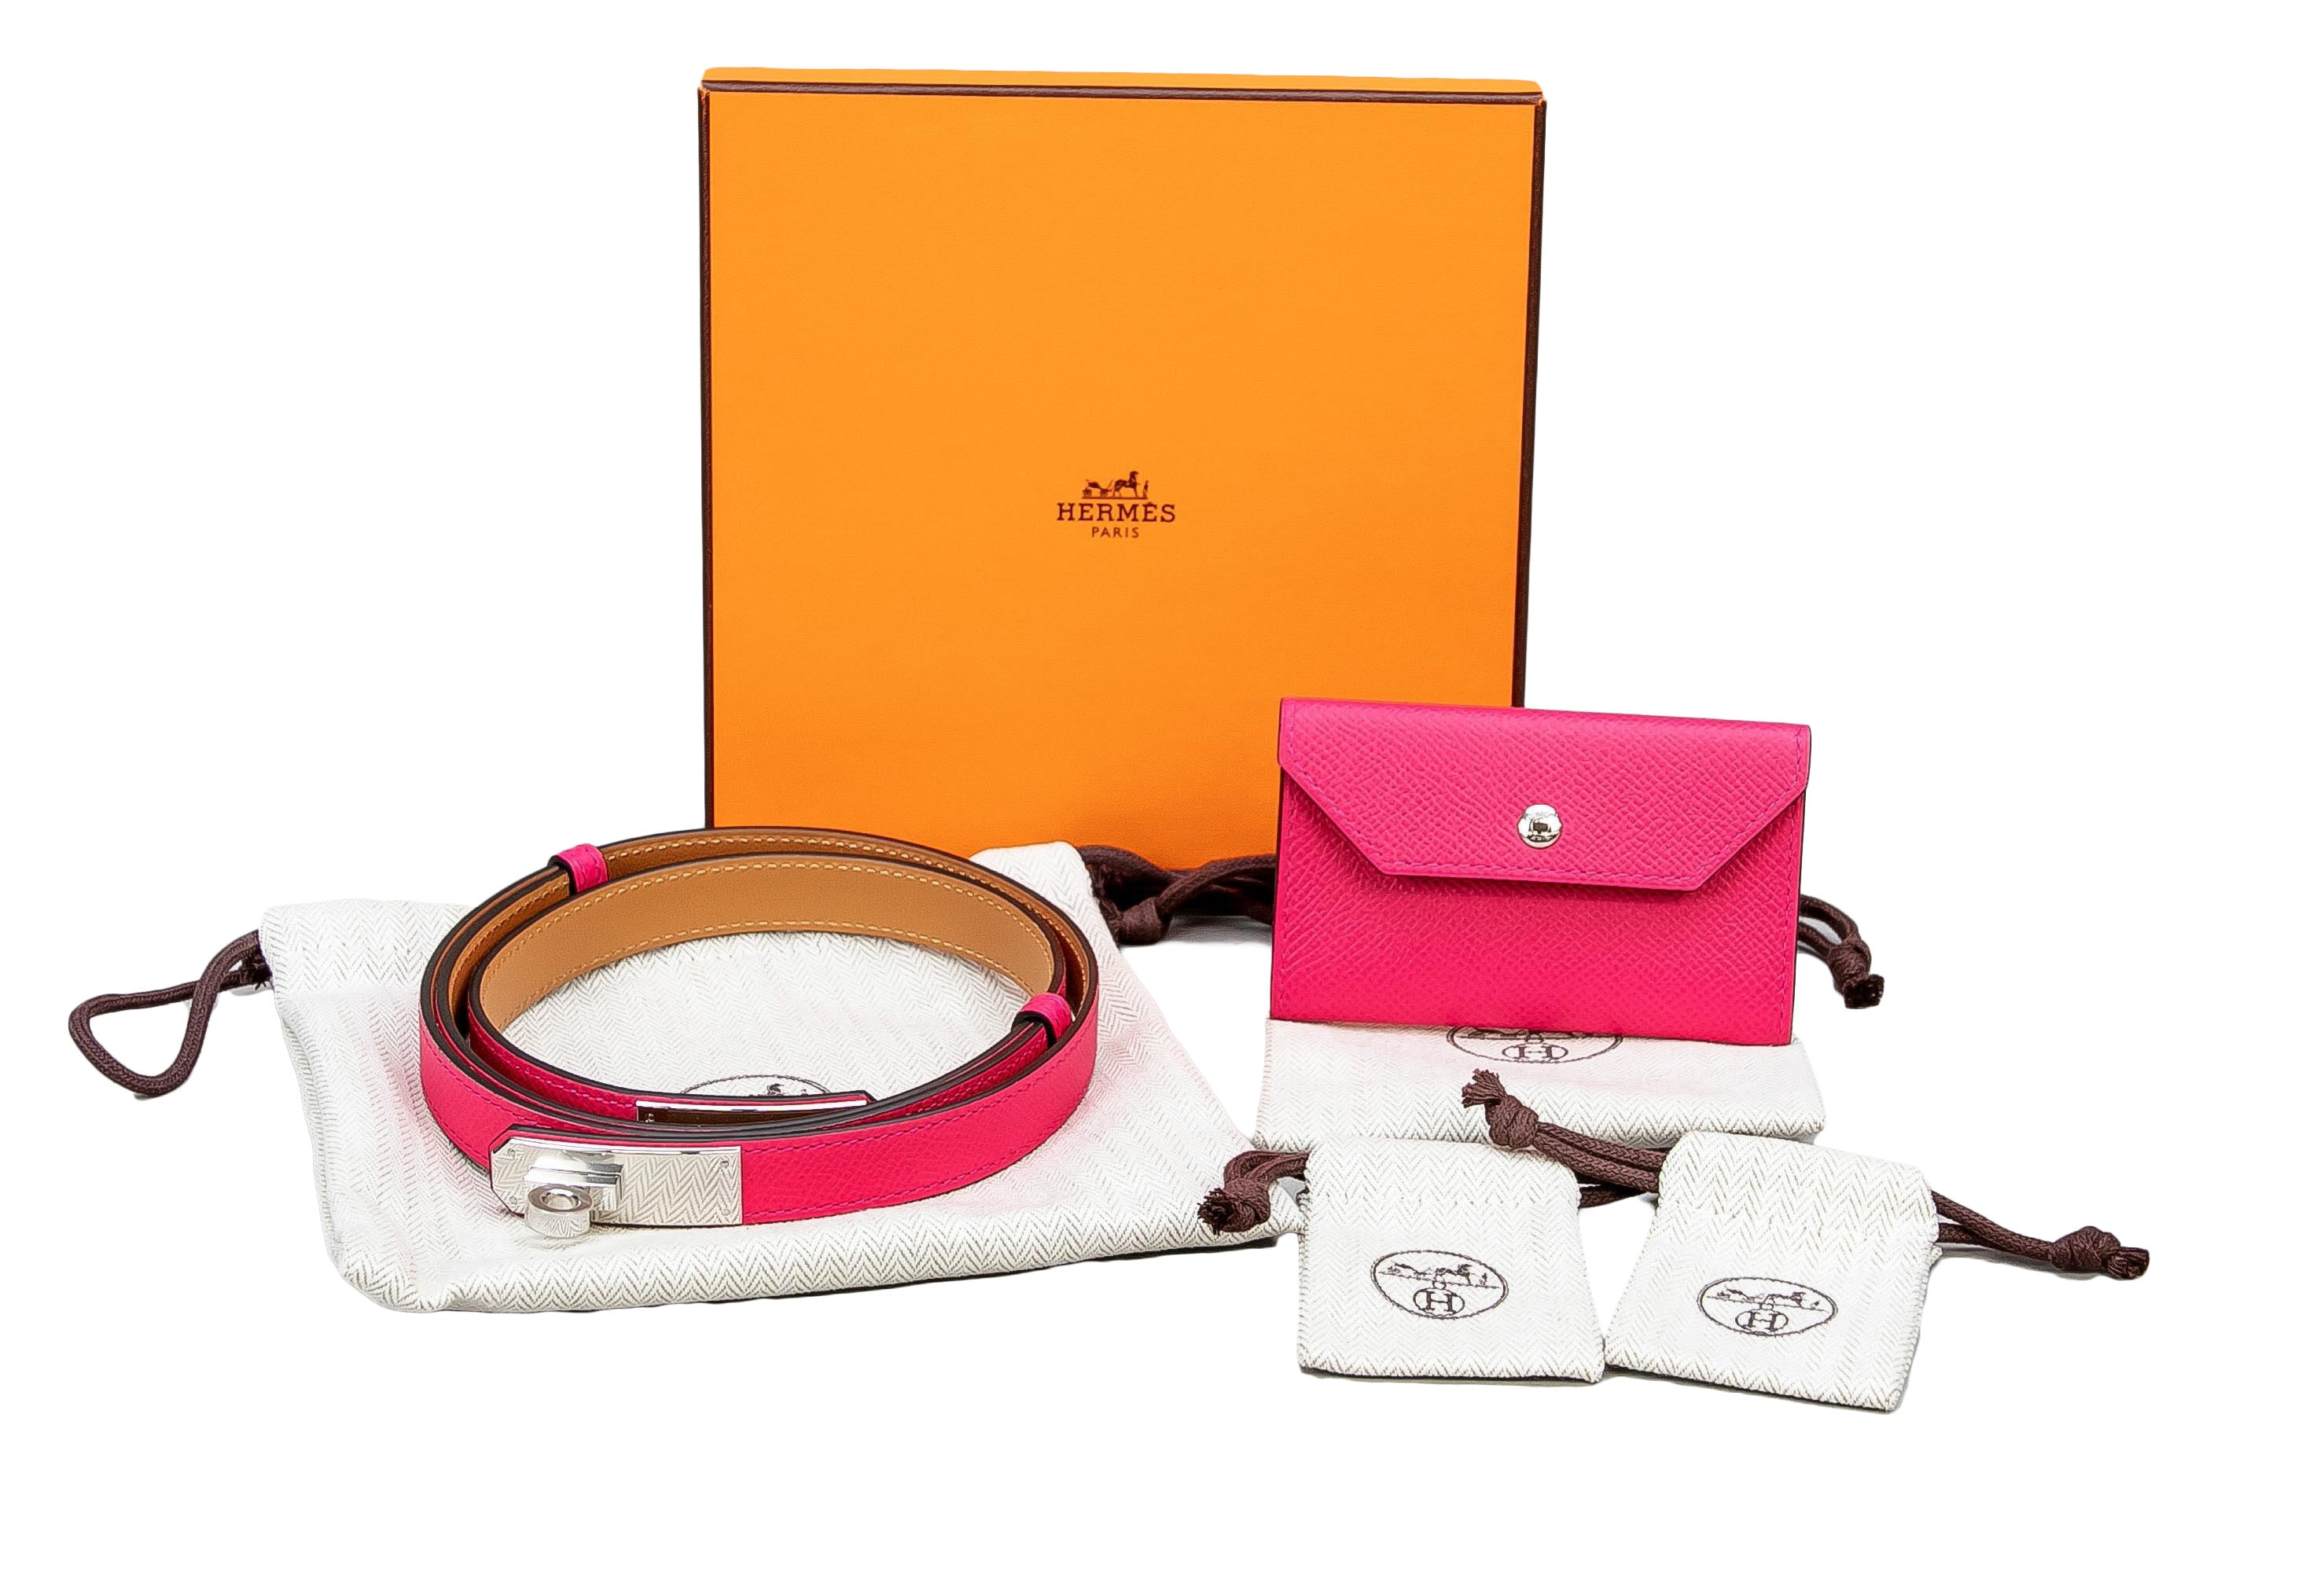 Authenitc Hermes Belt Bag for Sale in Houston, TX - OfferUp